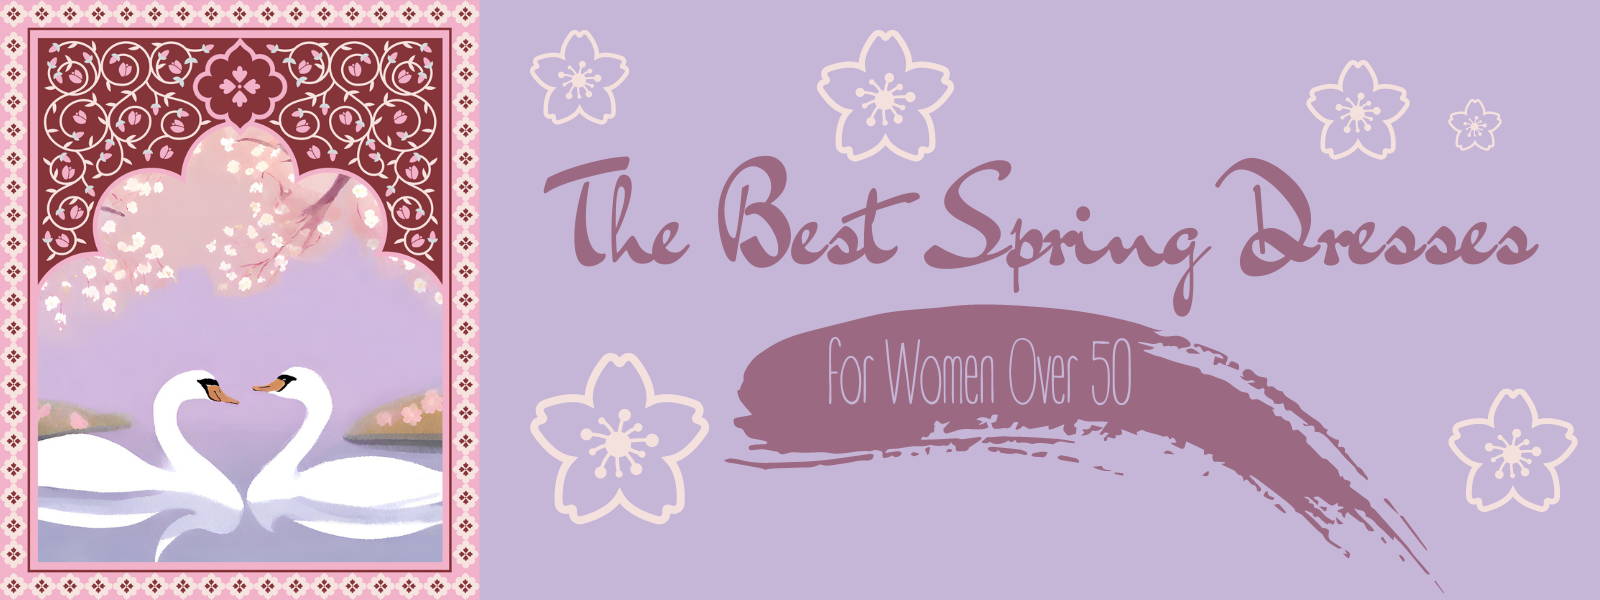 The Best Spring Dresses for Women Over 50